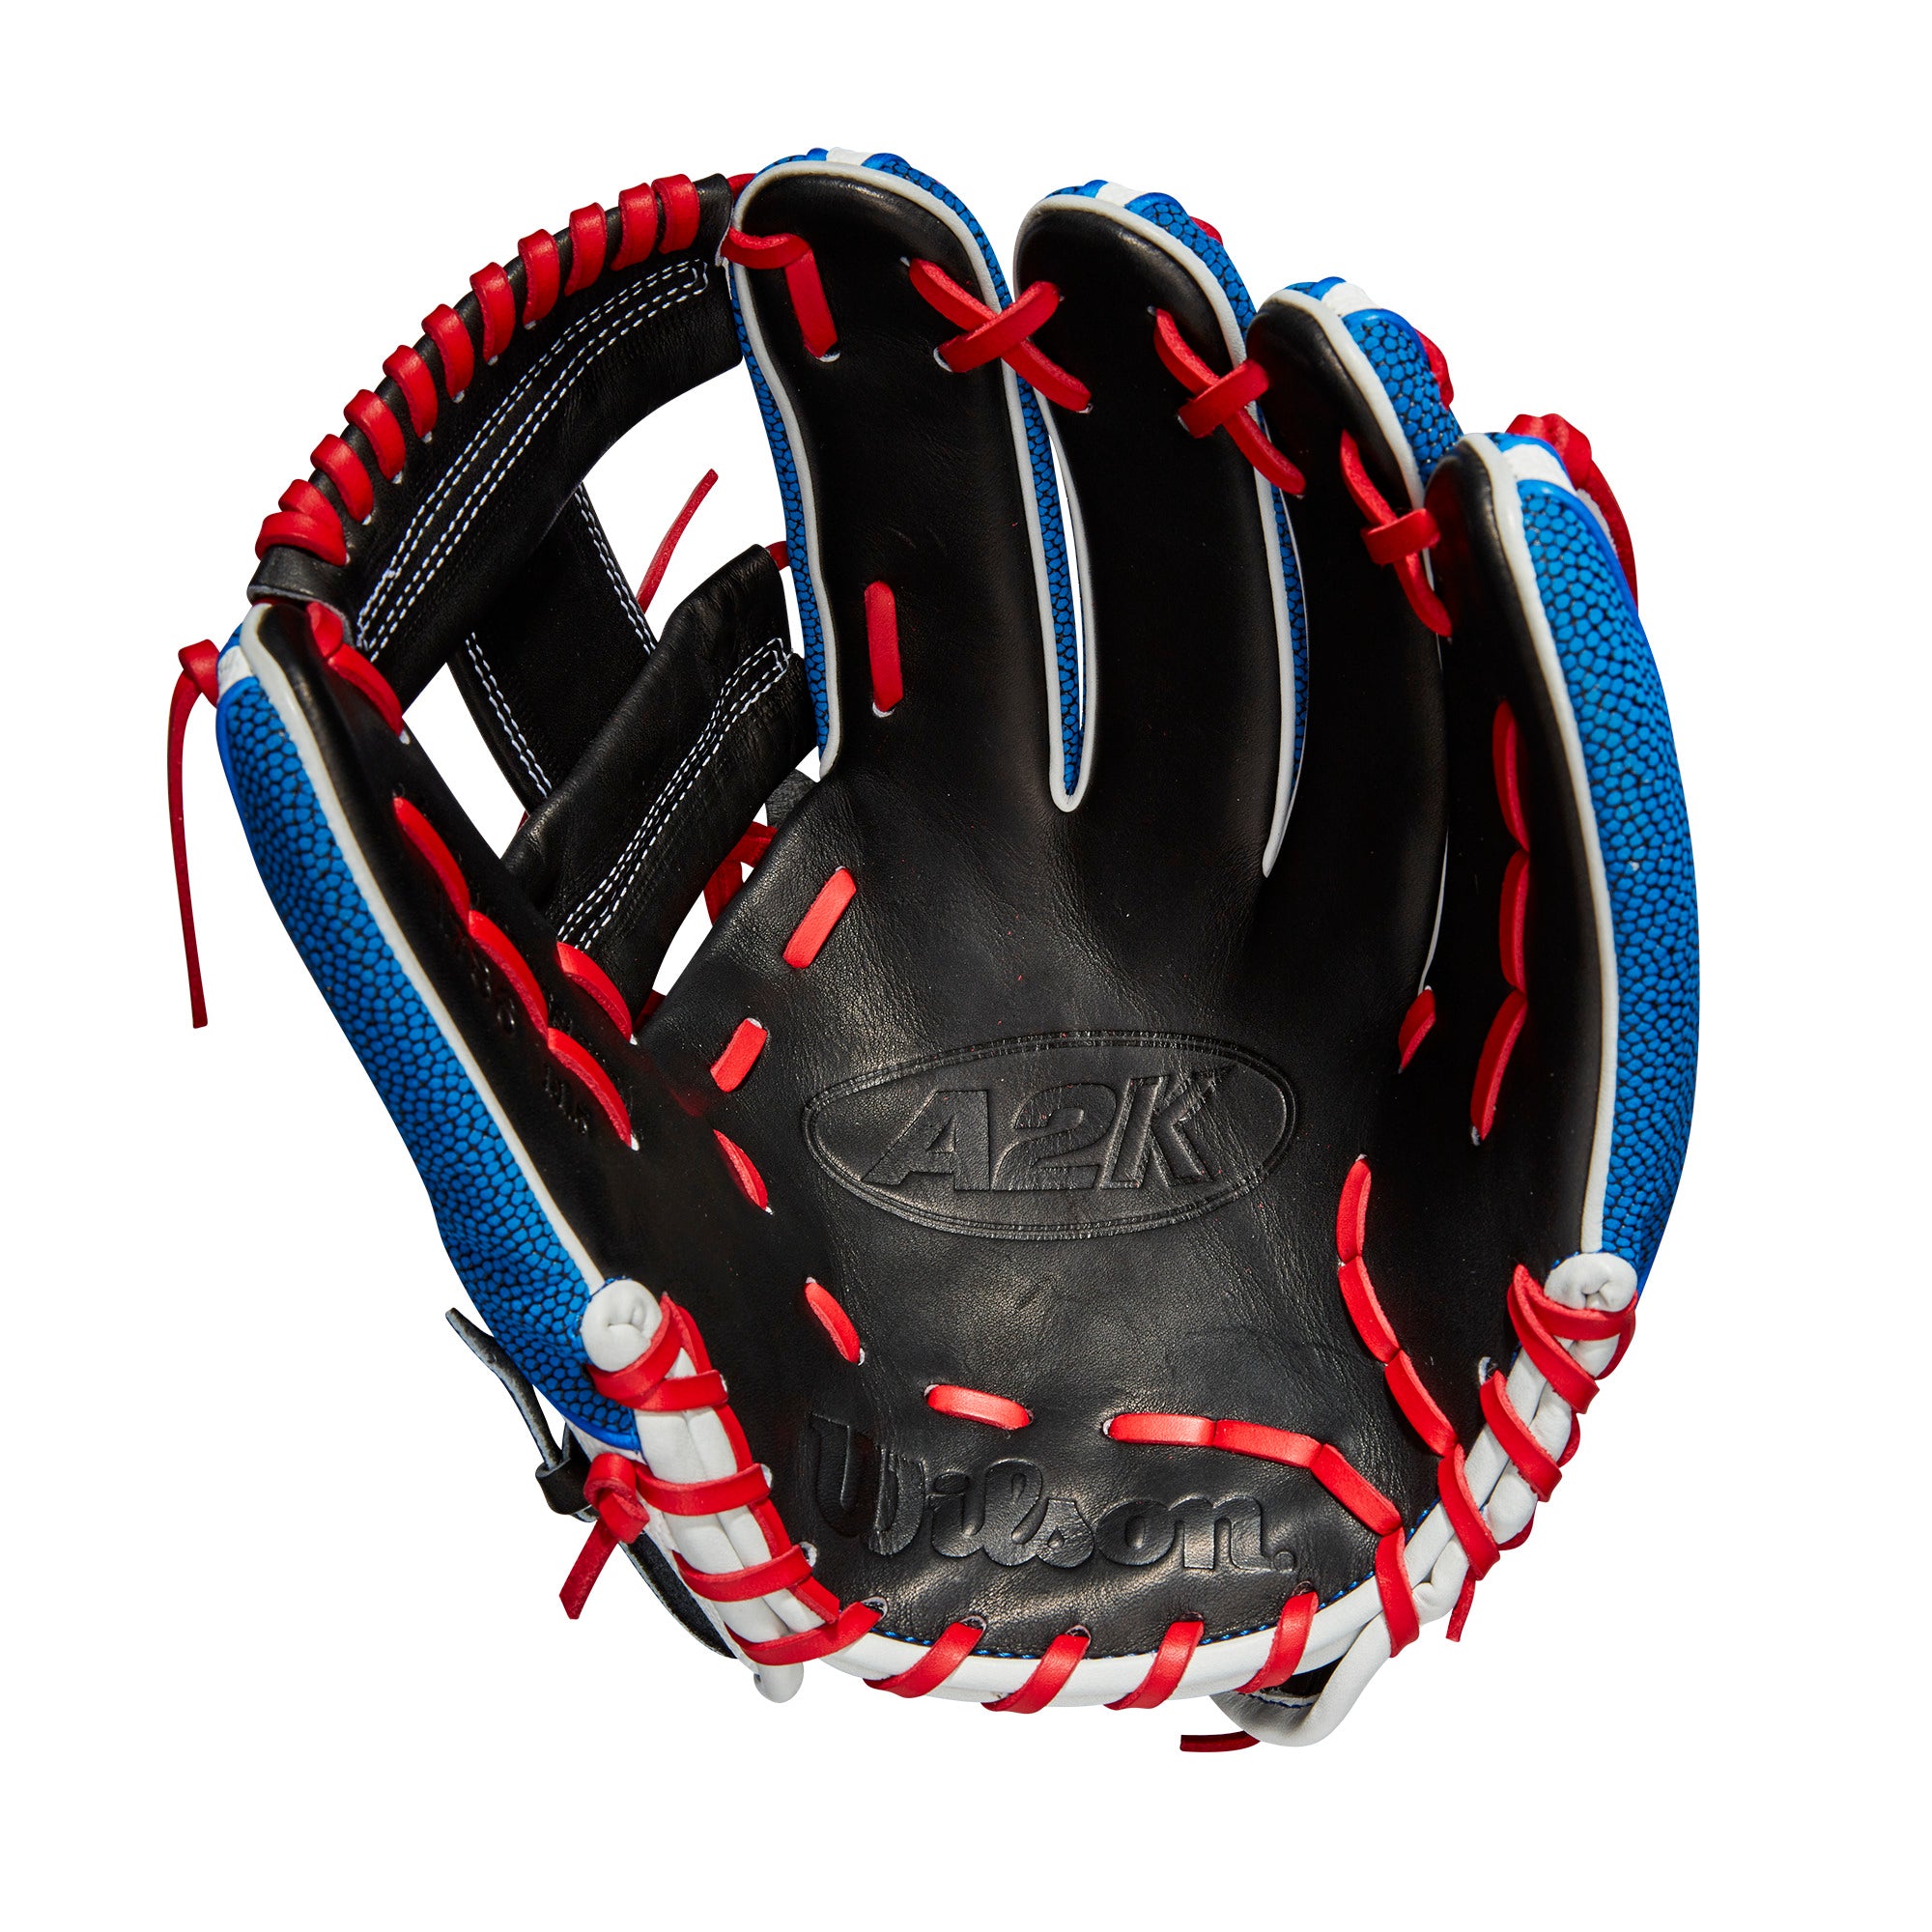 NWT Wilson A2K Exclusive - Mookie Betts 1786 11.5 baseball glove